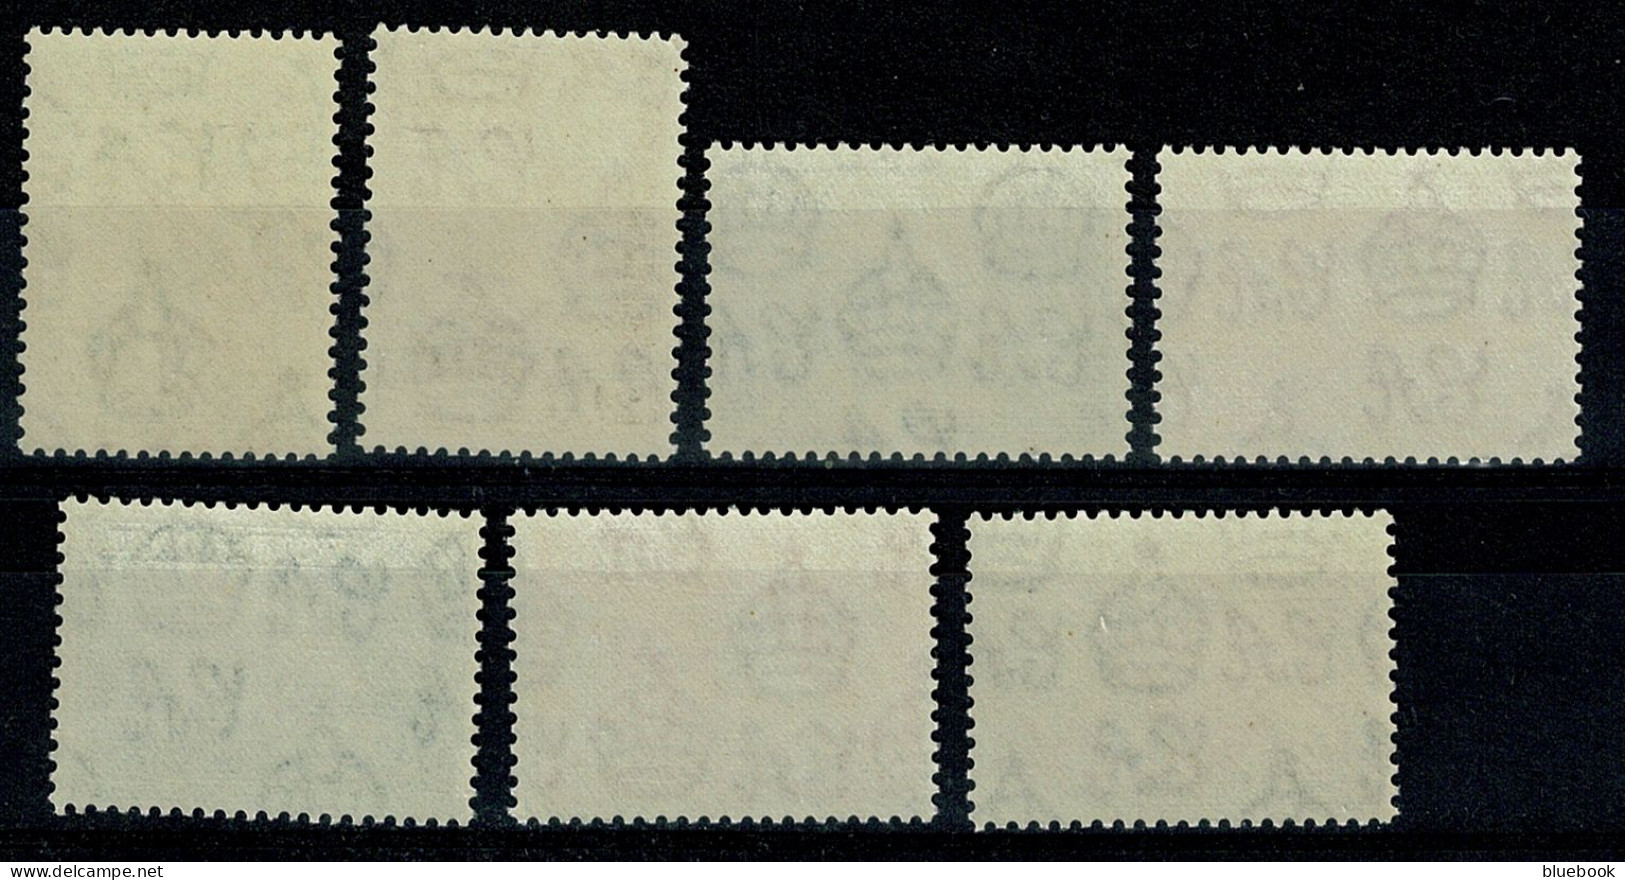 Ref 1649 - KGVI Gold Coast 1935-46 - Unmounted Mint Stamps Set SG 135/146 - Goudkust (...-1957)